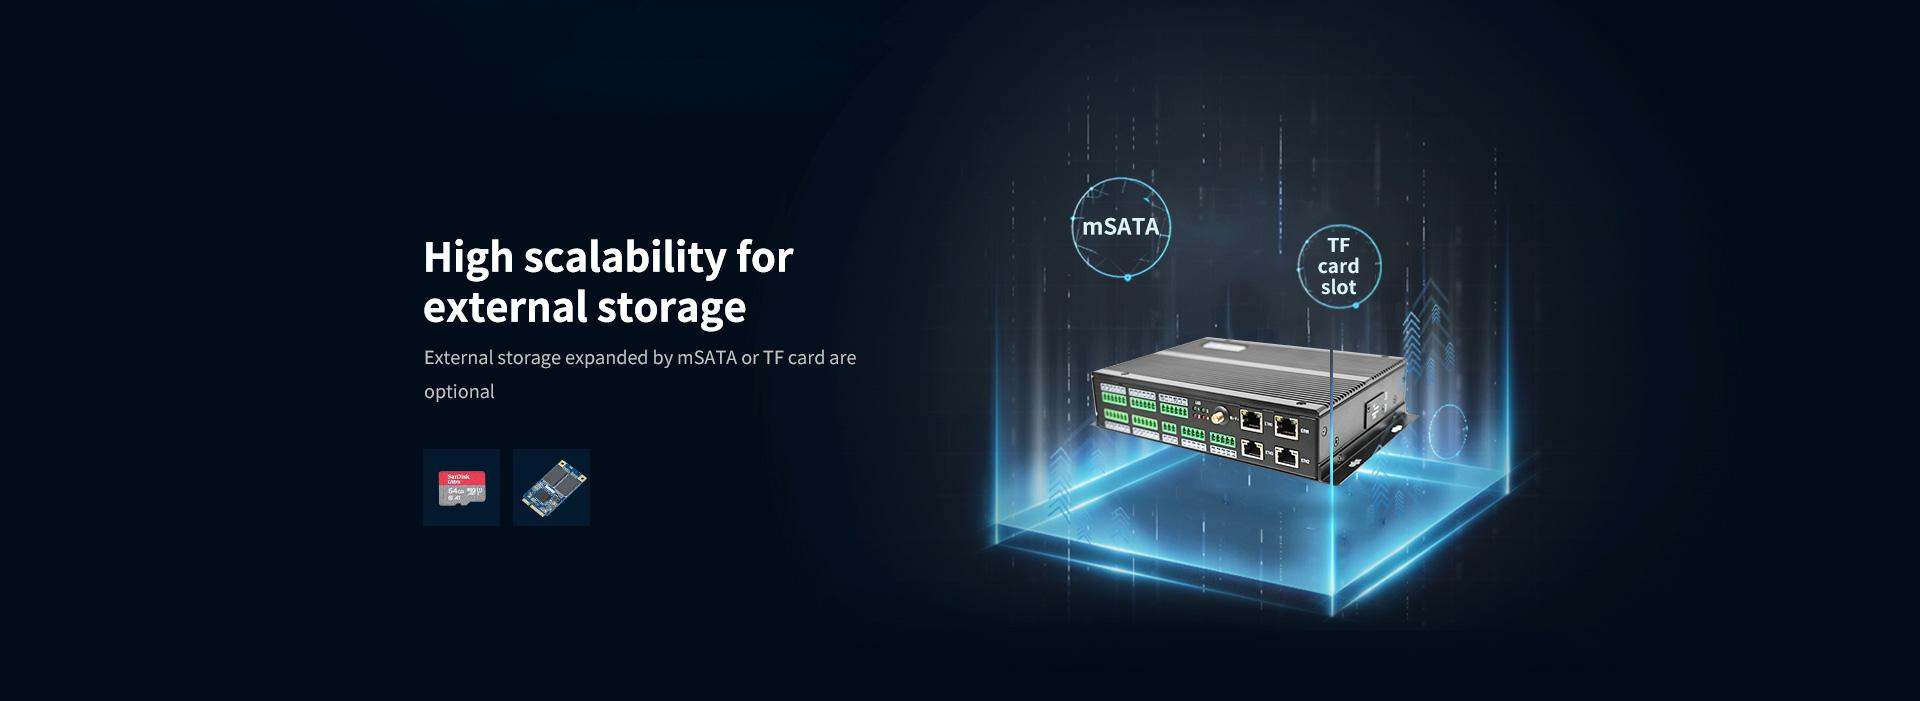 FCU2601 High scalability for external storage